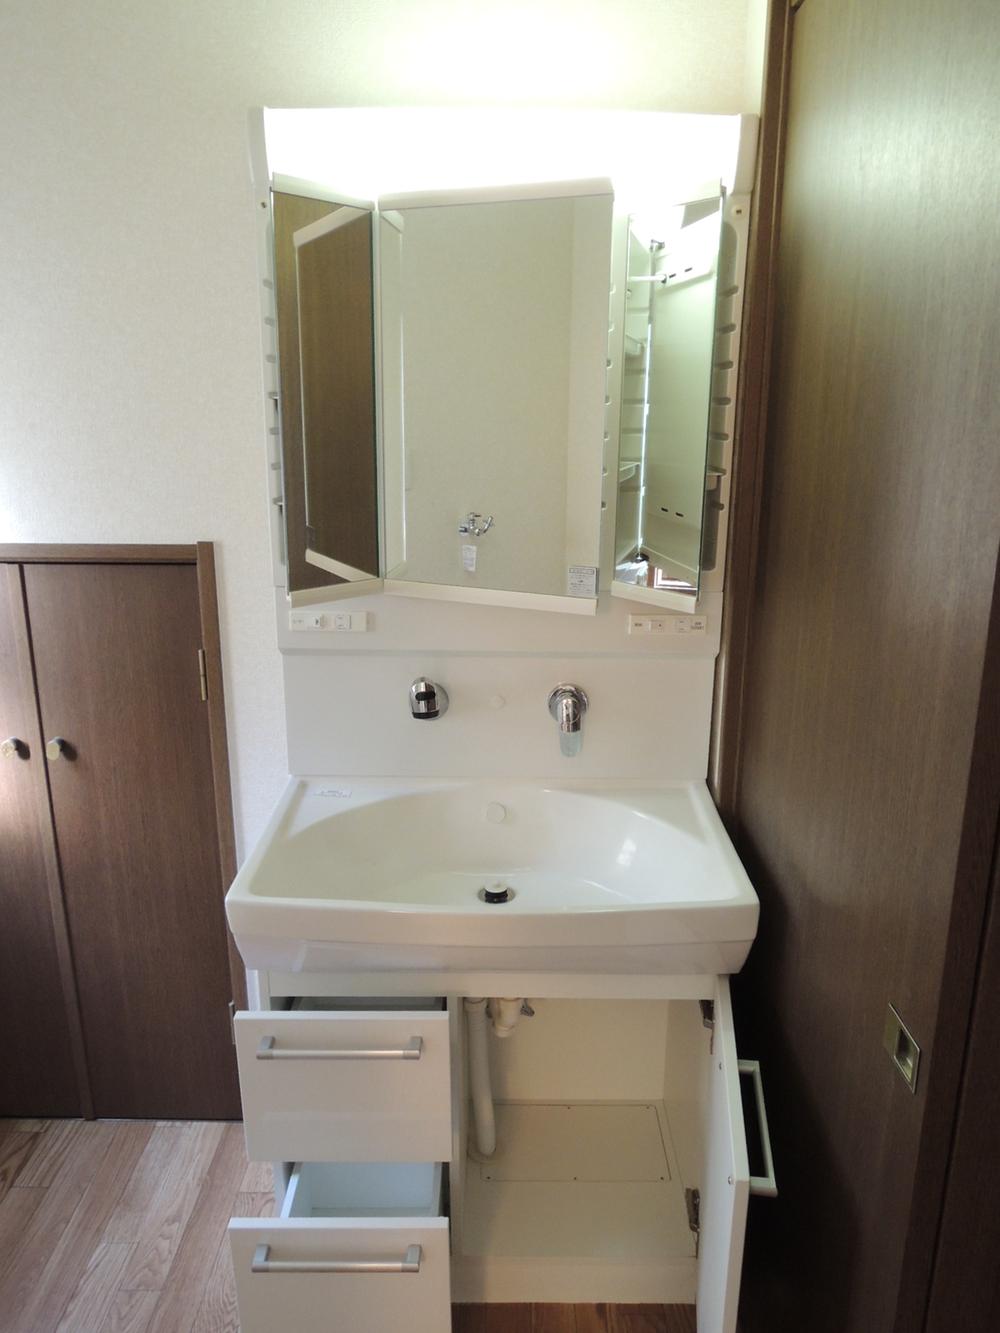 Wash basin, toilet. Shampoo dresser of luxury three-sided mirror